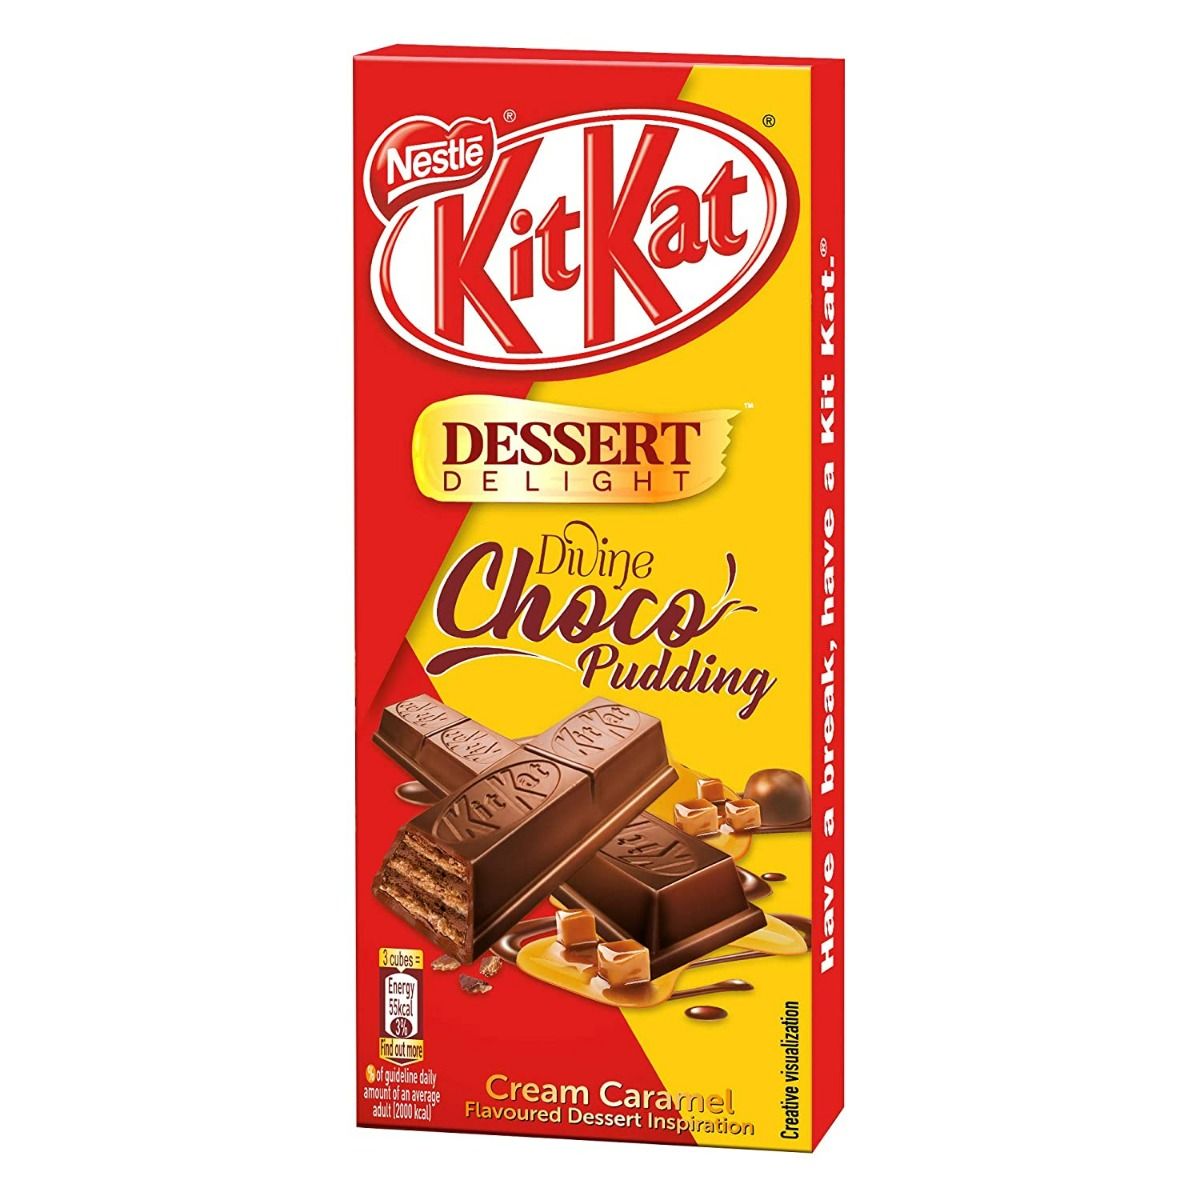 Buy Nestle Kitkat Dessert Delight Divine Choco Pudding Chocolate Bar, 50 gm Online